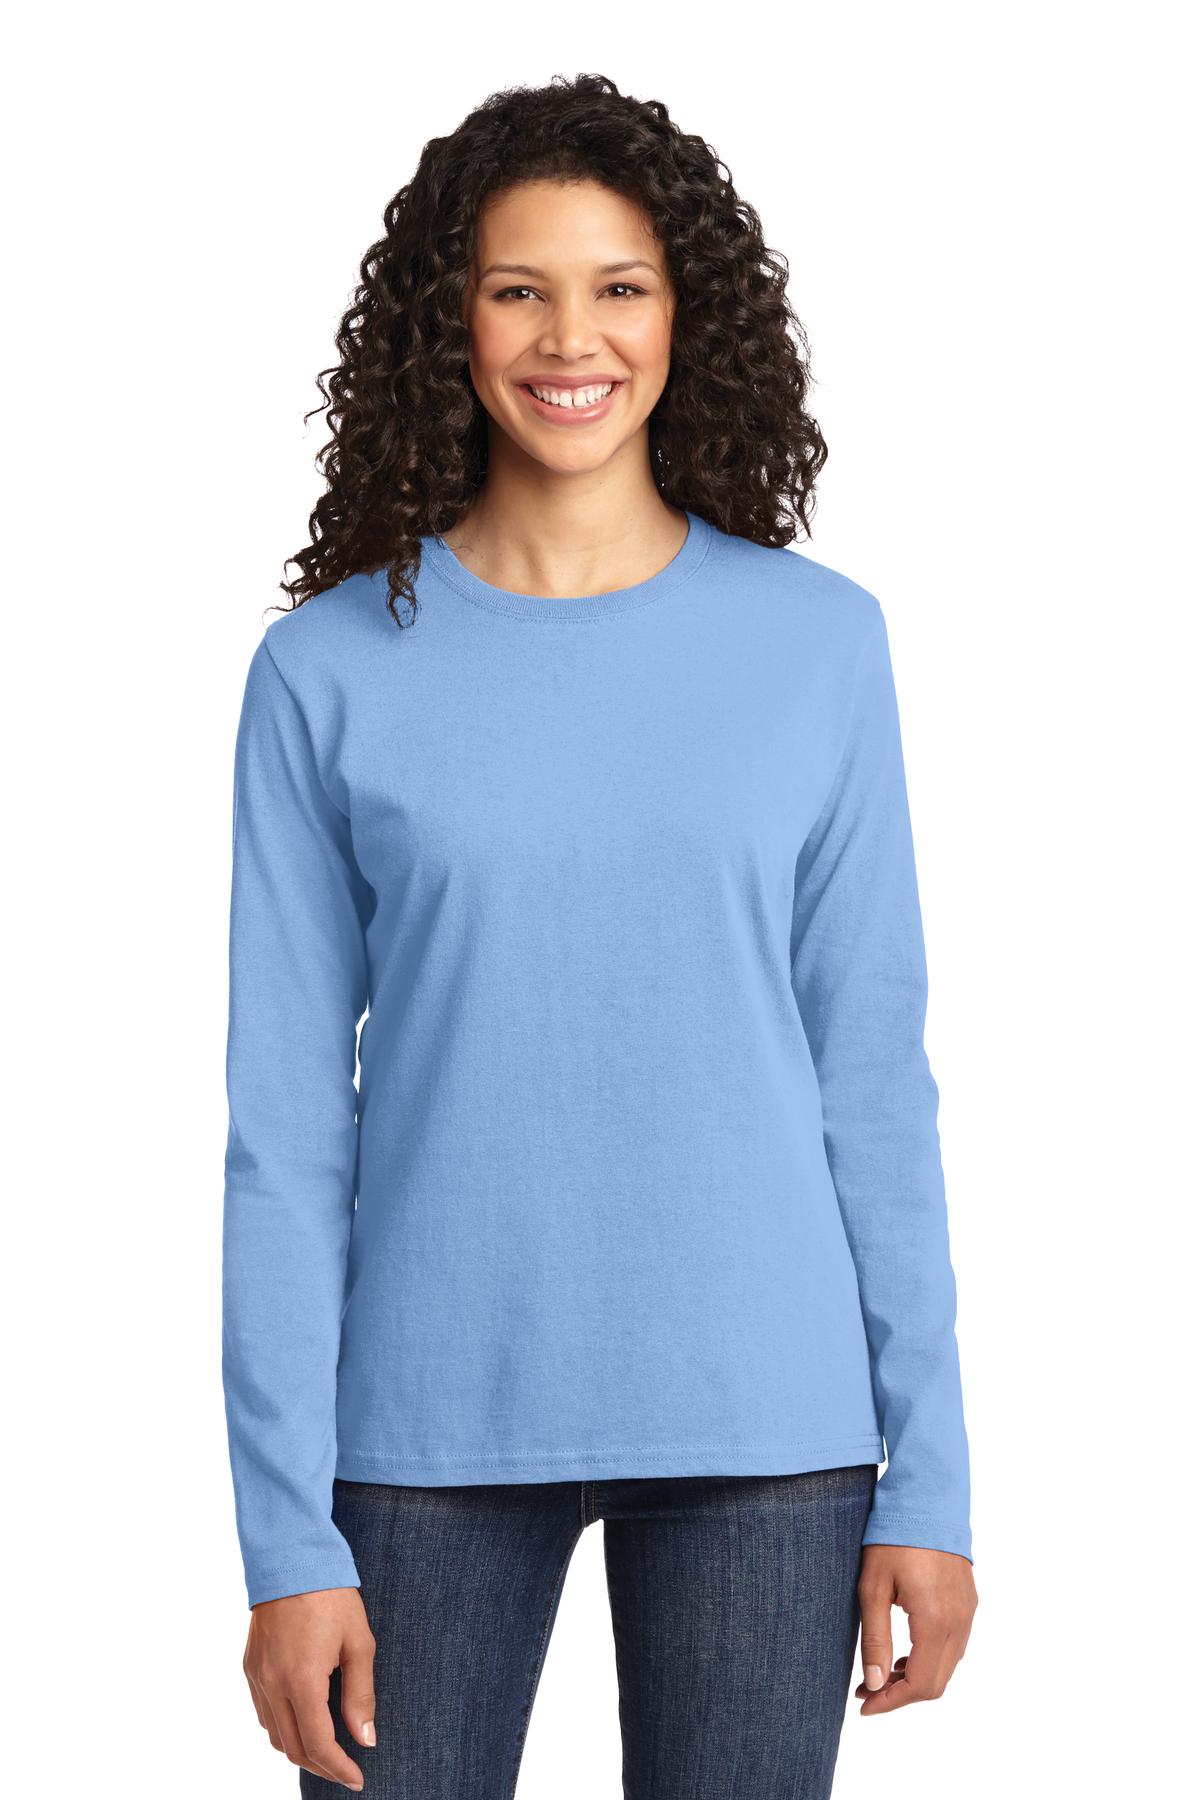 Port & Company Women's Long Sleeve Core Cotton T-Shirt LPC54LS - image 1 of 1